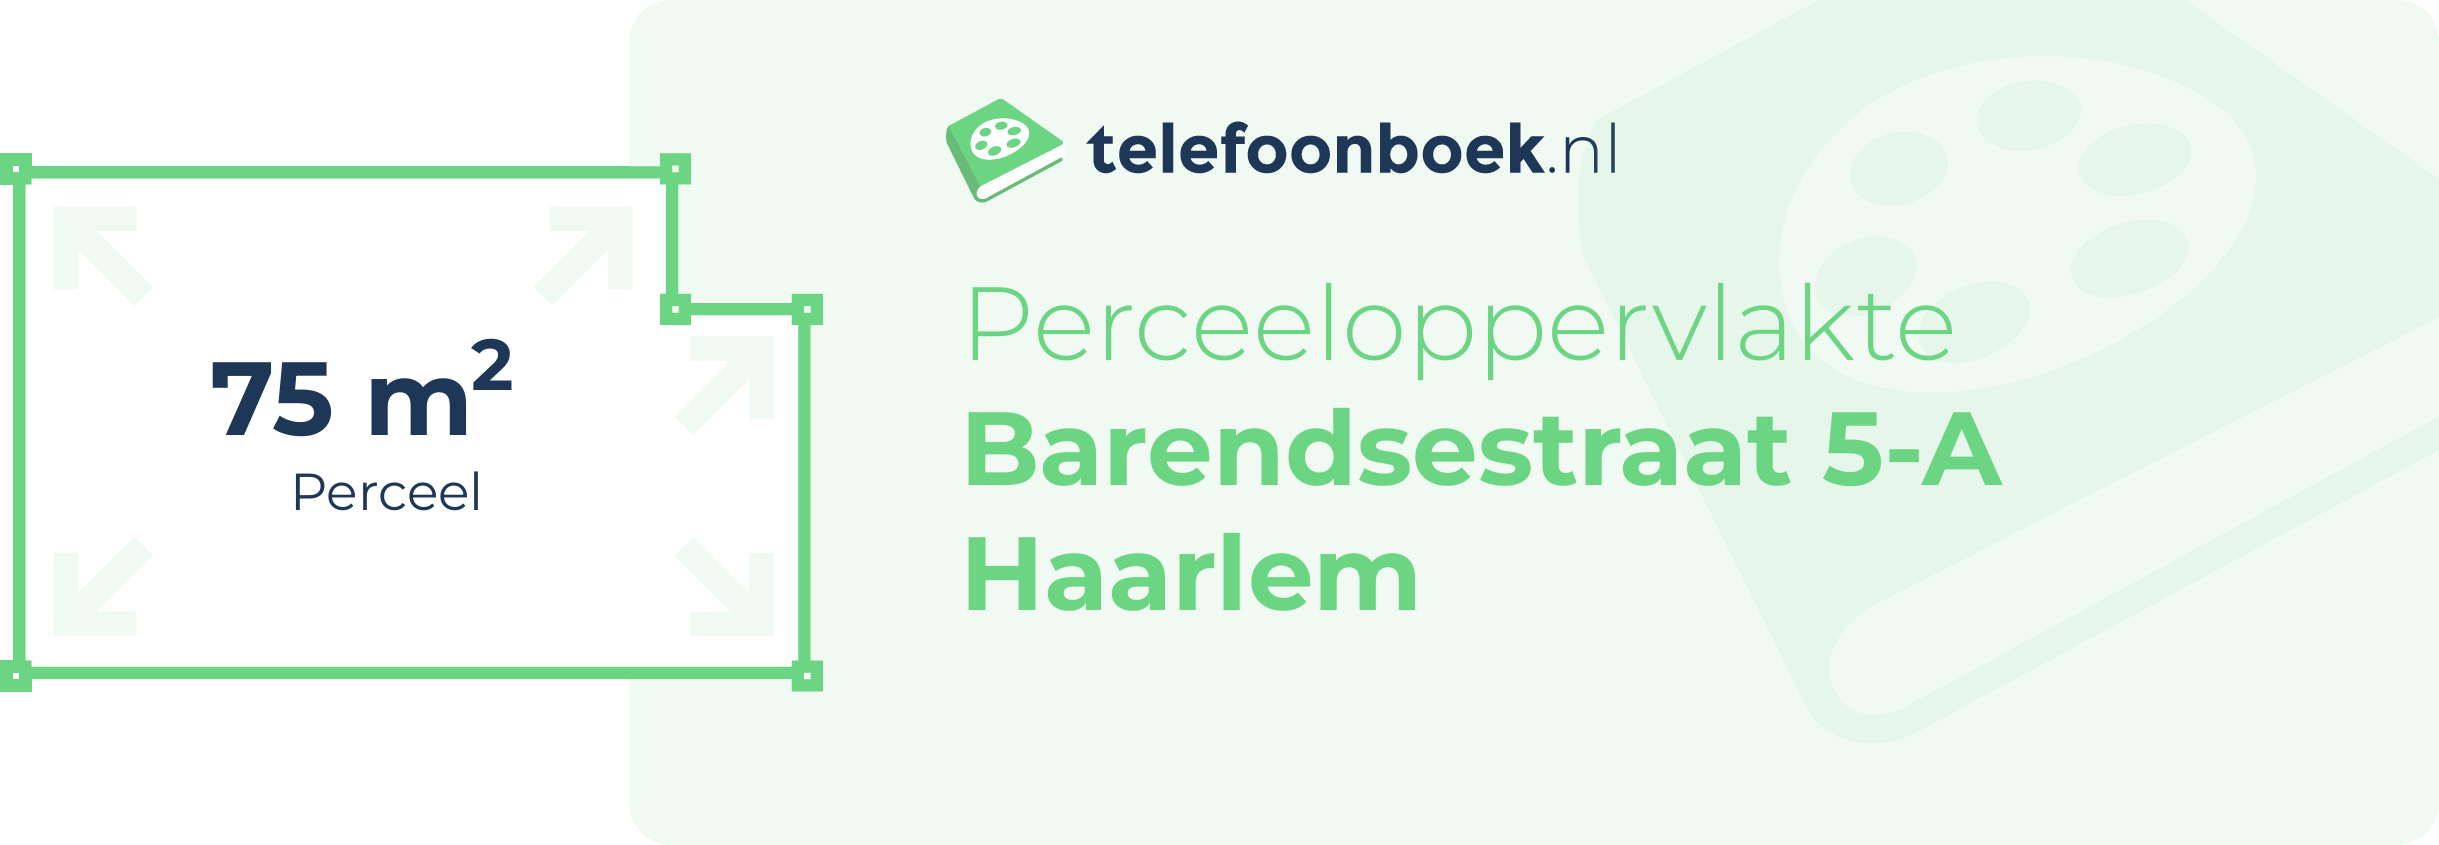 Perceeloppervlakte Barendsestraat 5-A Haarlem